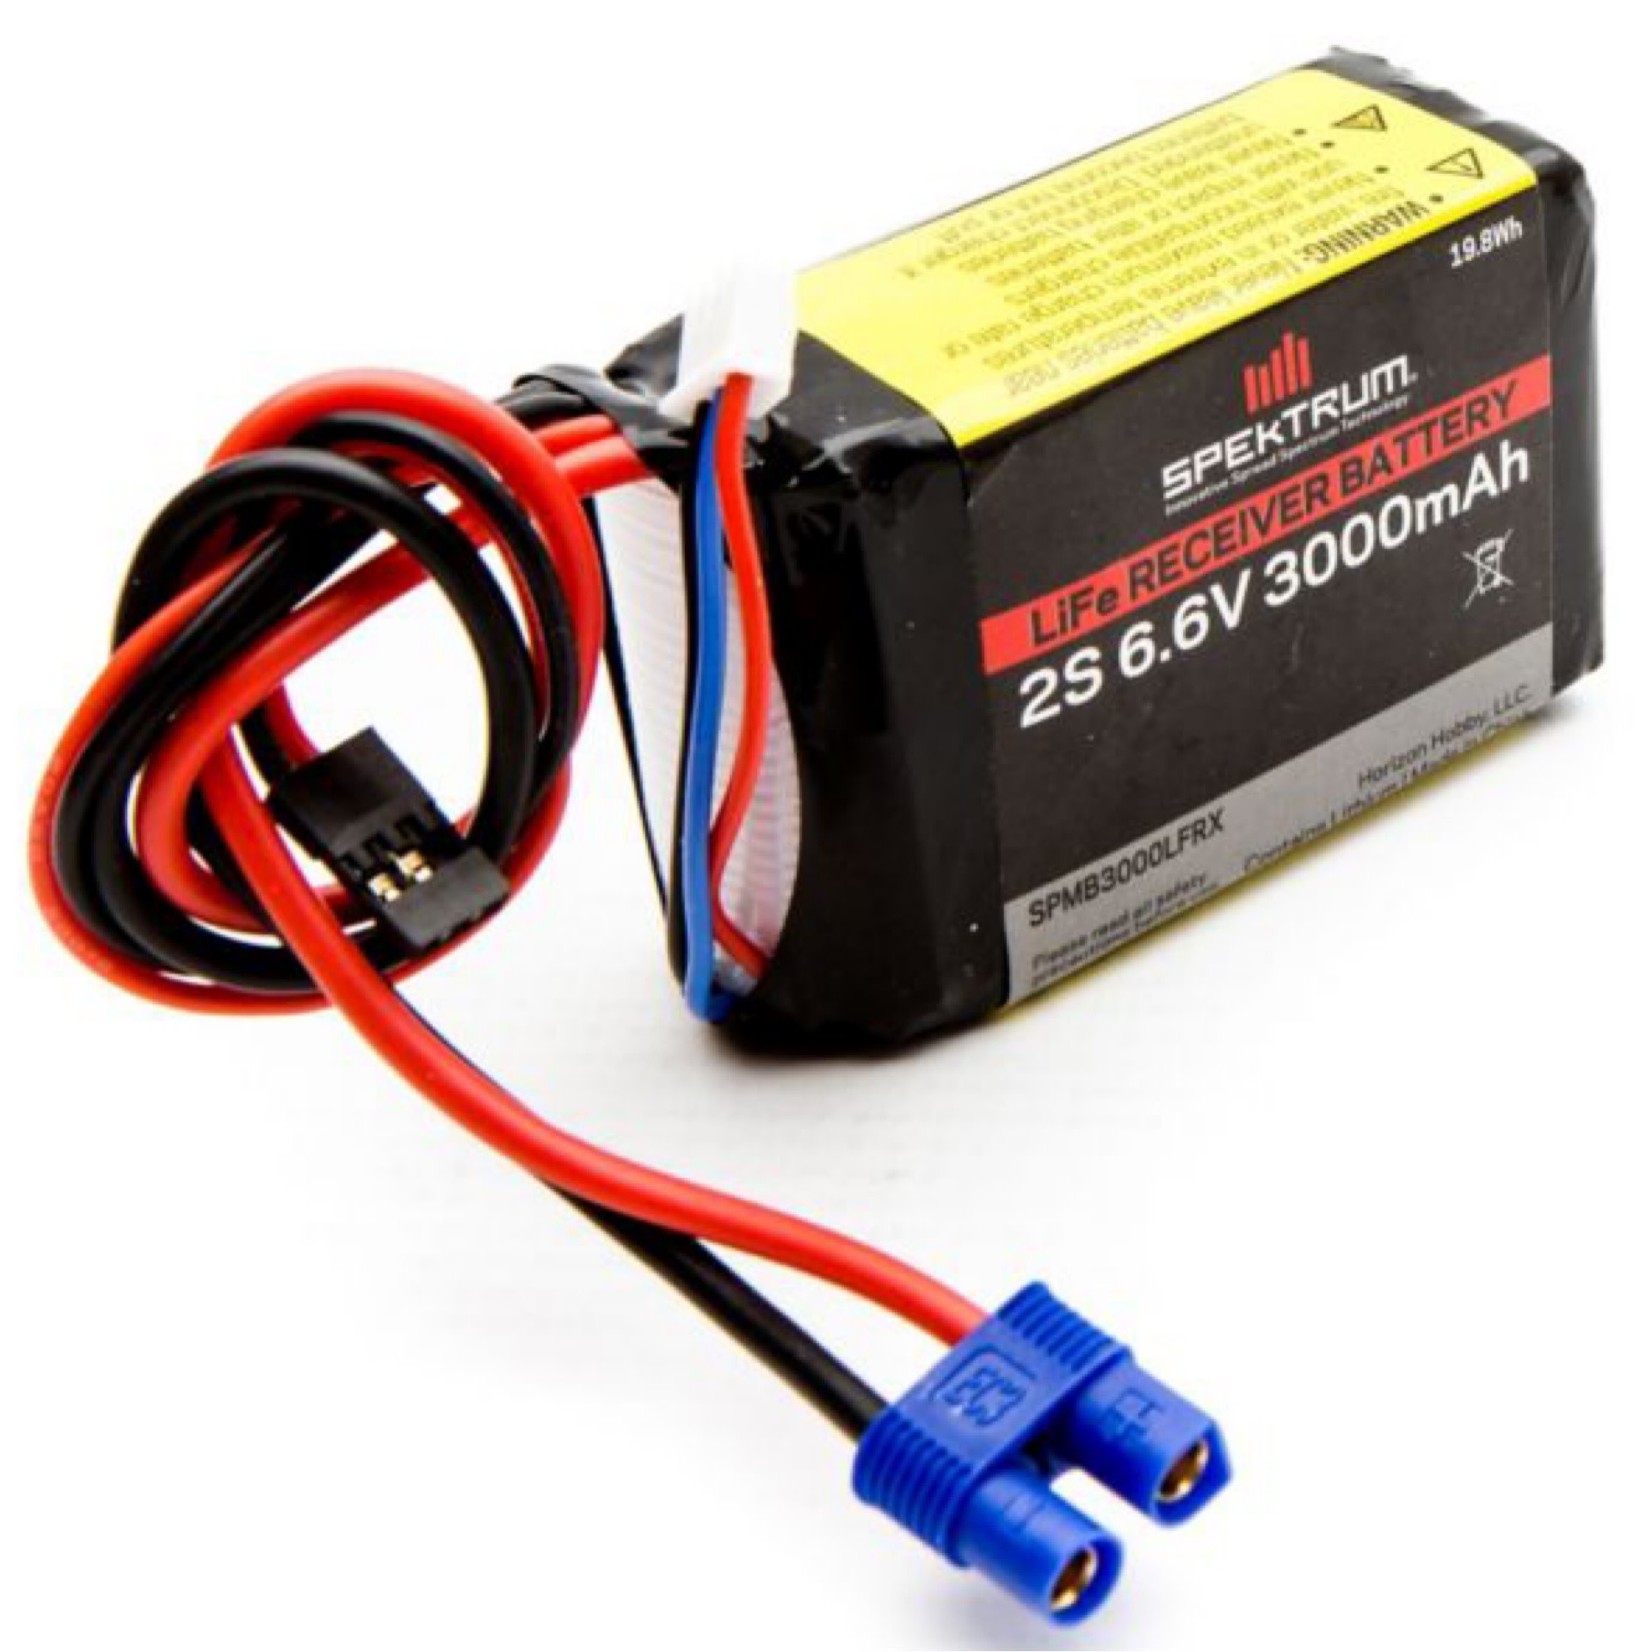 Spektrum Spektrum RC LiFe Receiver Battery Pack (6.6V/3000mAh) #SPMB3000LFRX